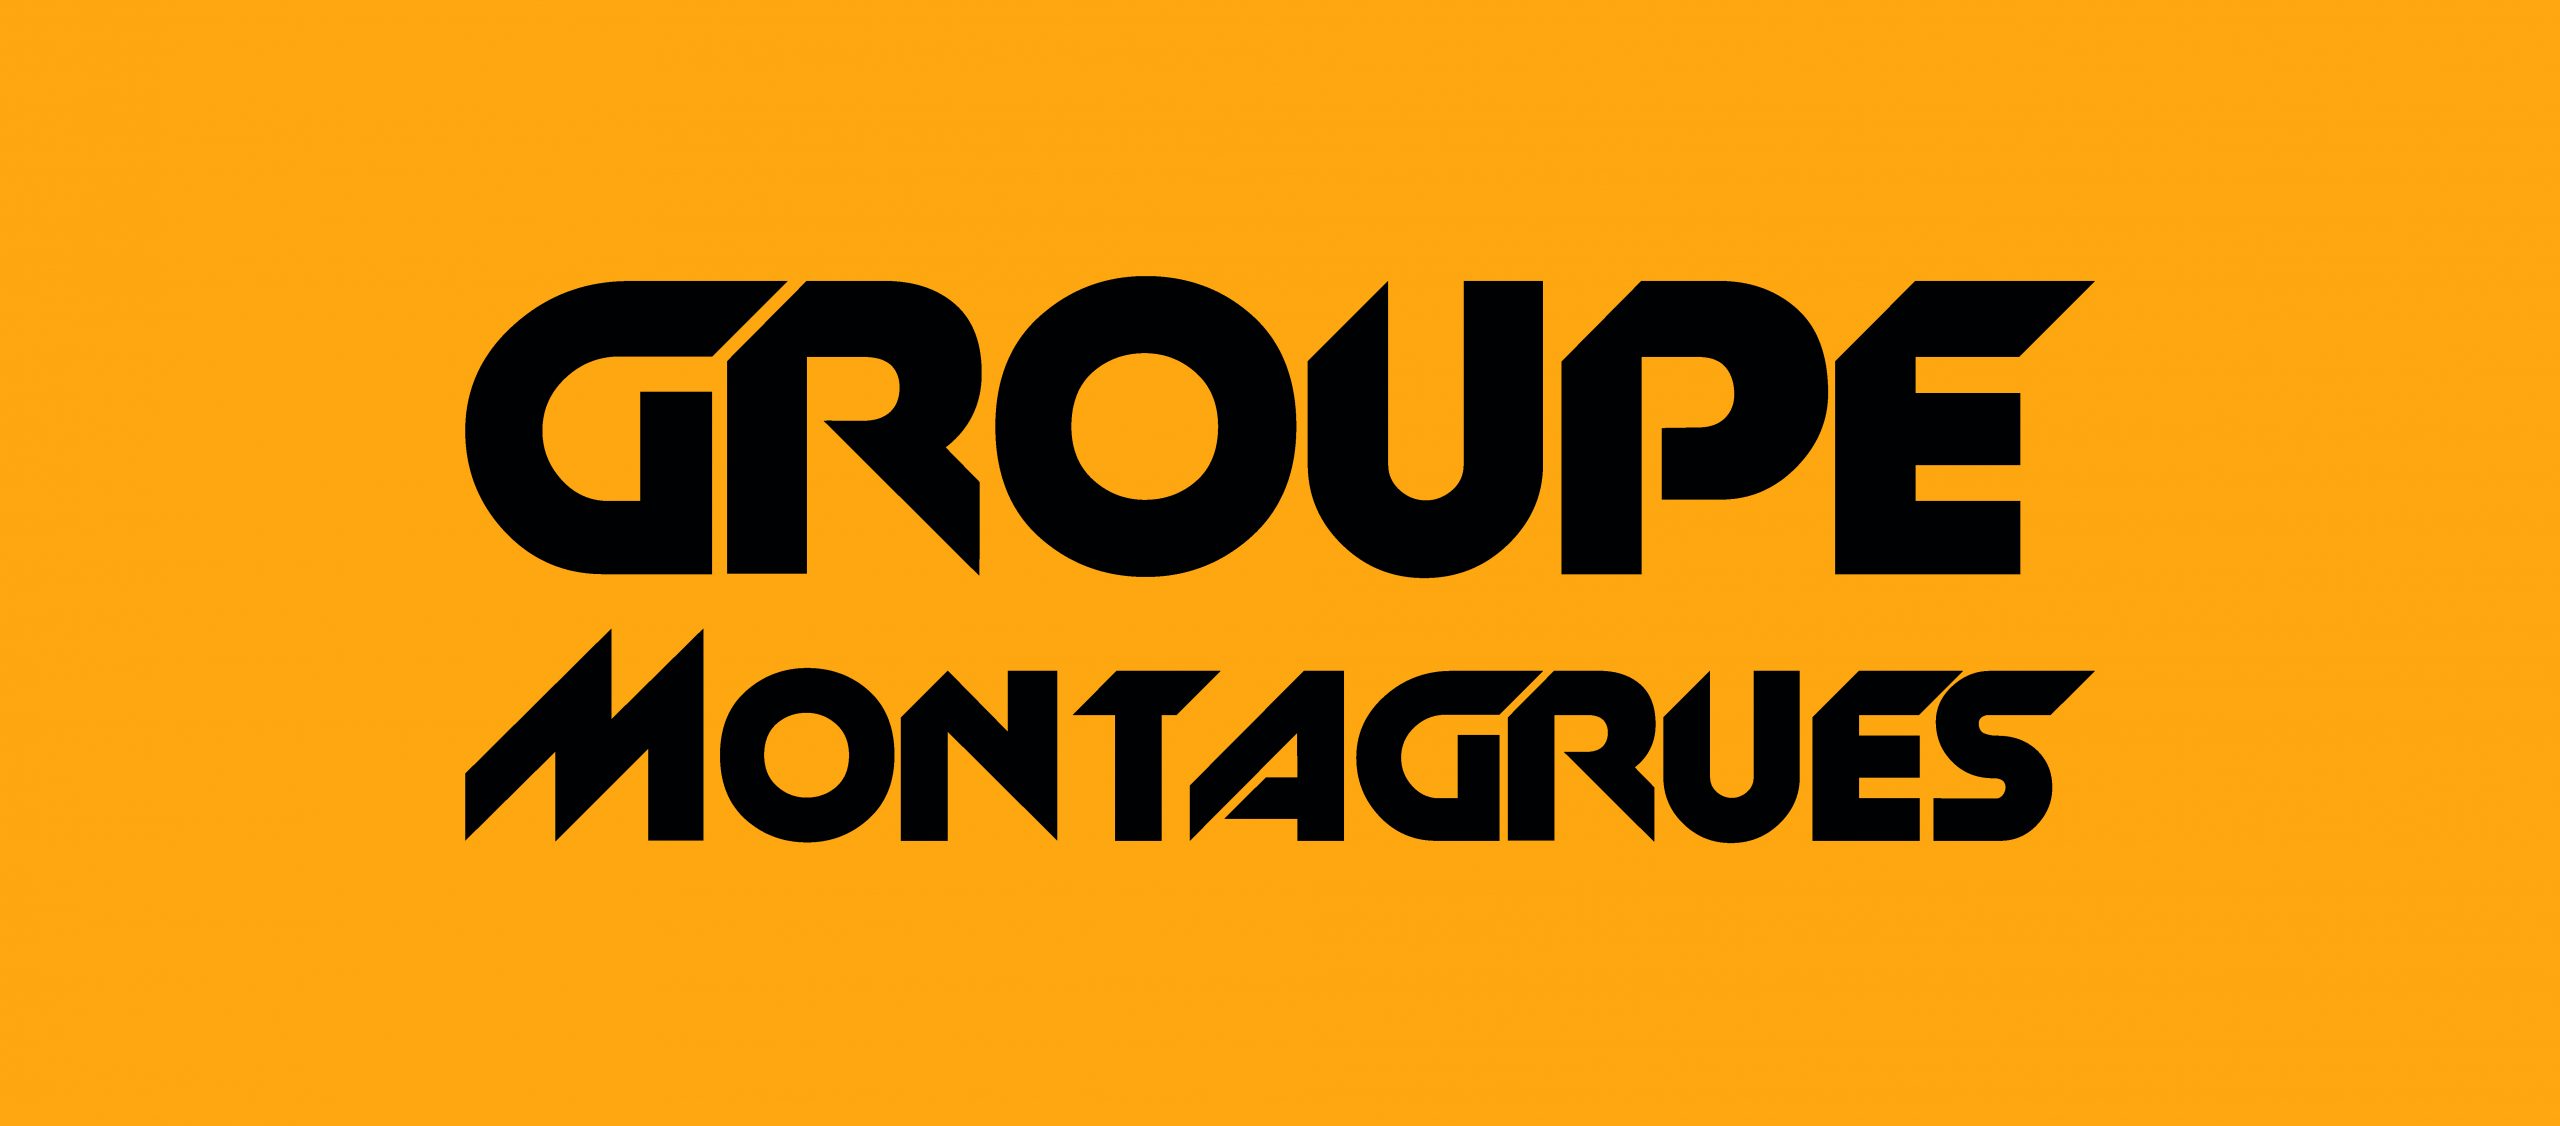 LOGO_Groupes-Montagrues